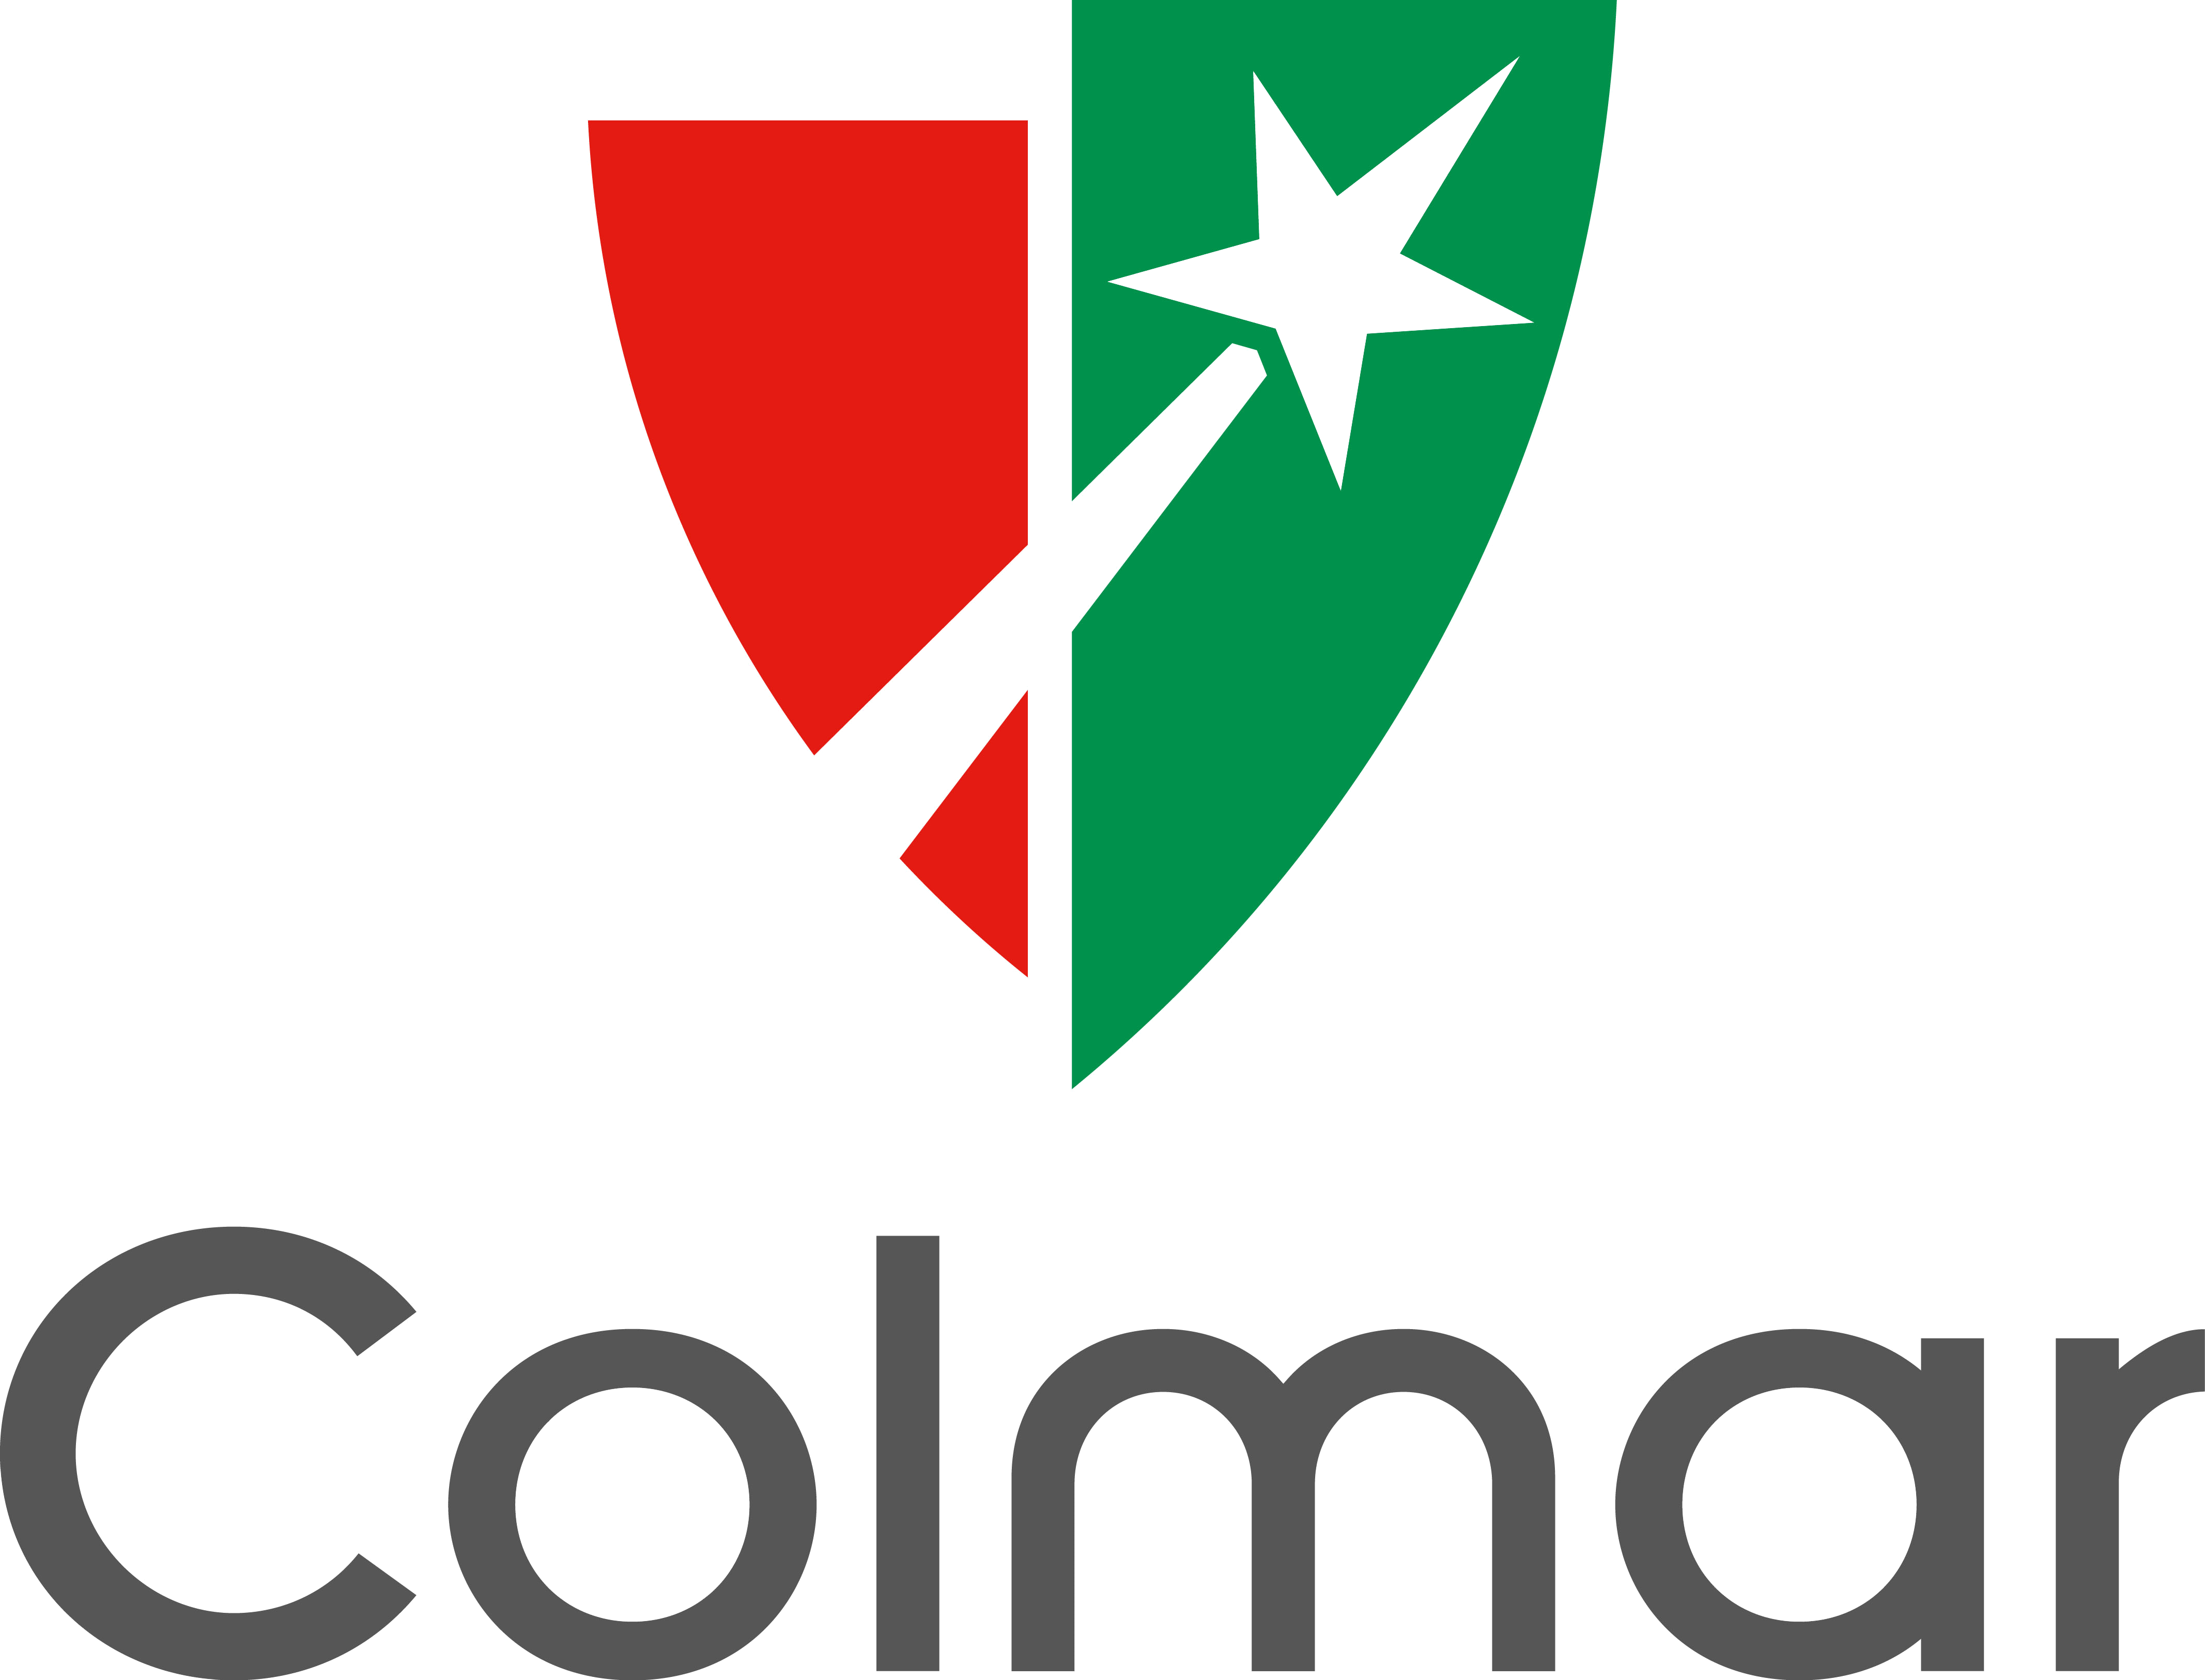 Colmar-logo.png (505 KB)